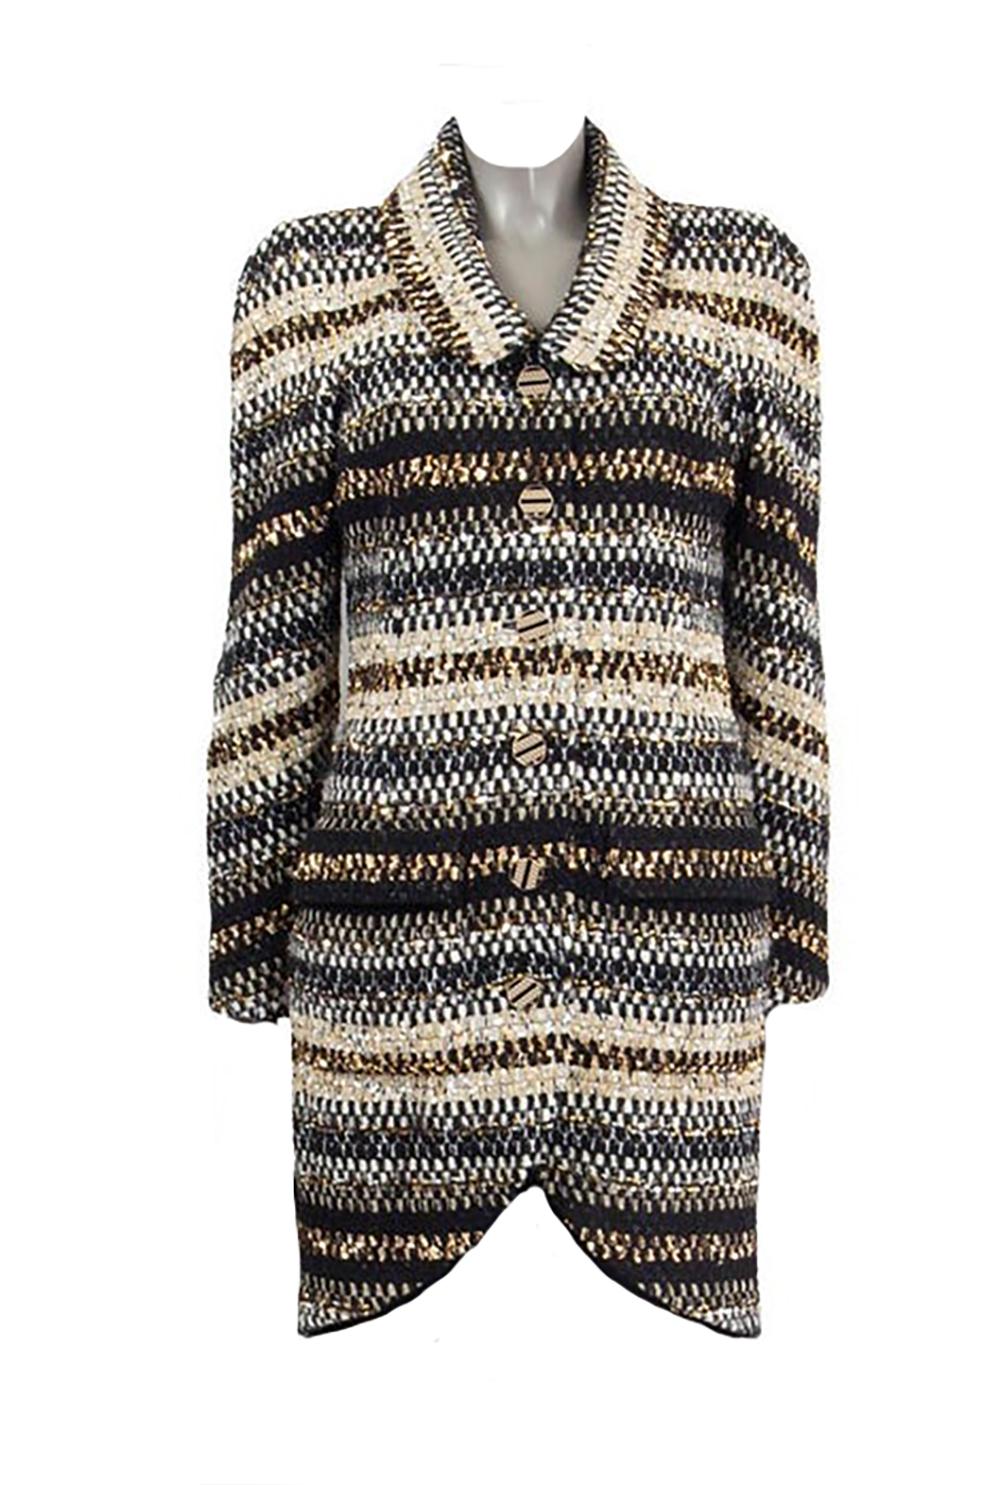 Chanel Paris / New-York / Egypt Tweed Jacket 4